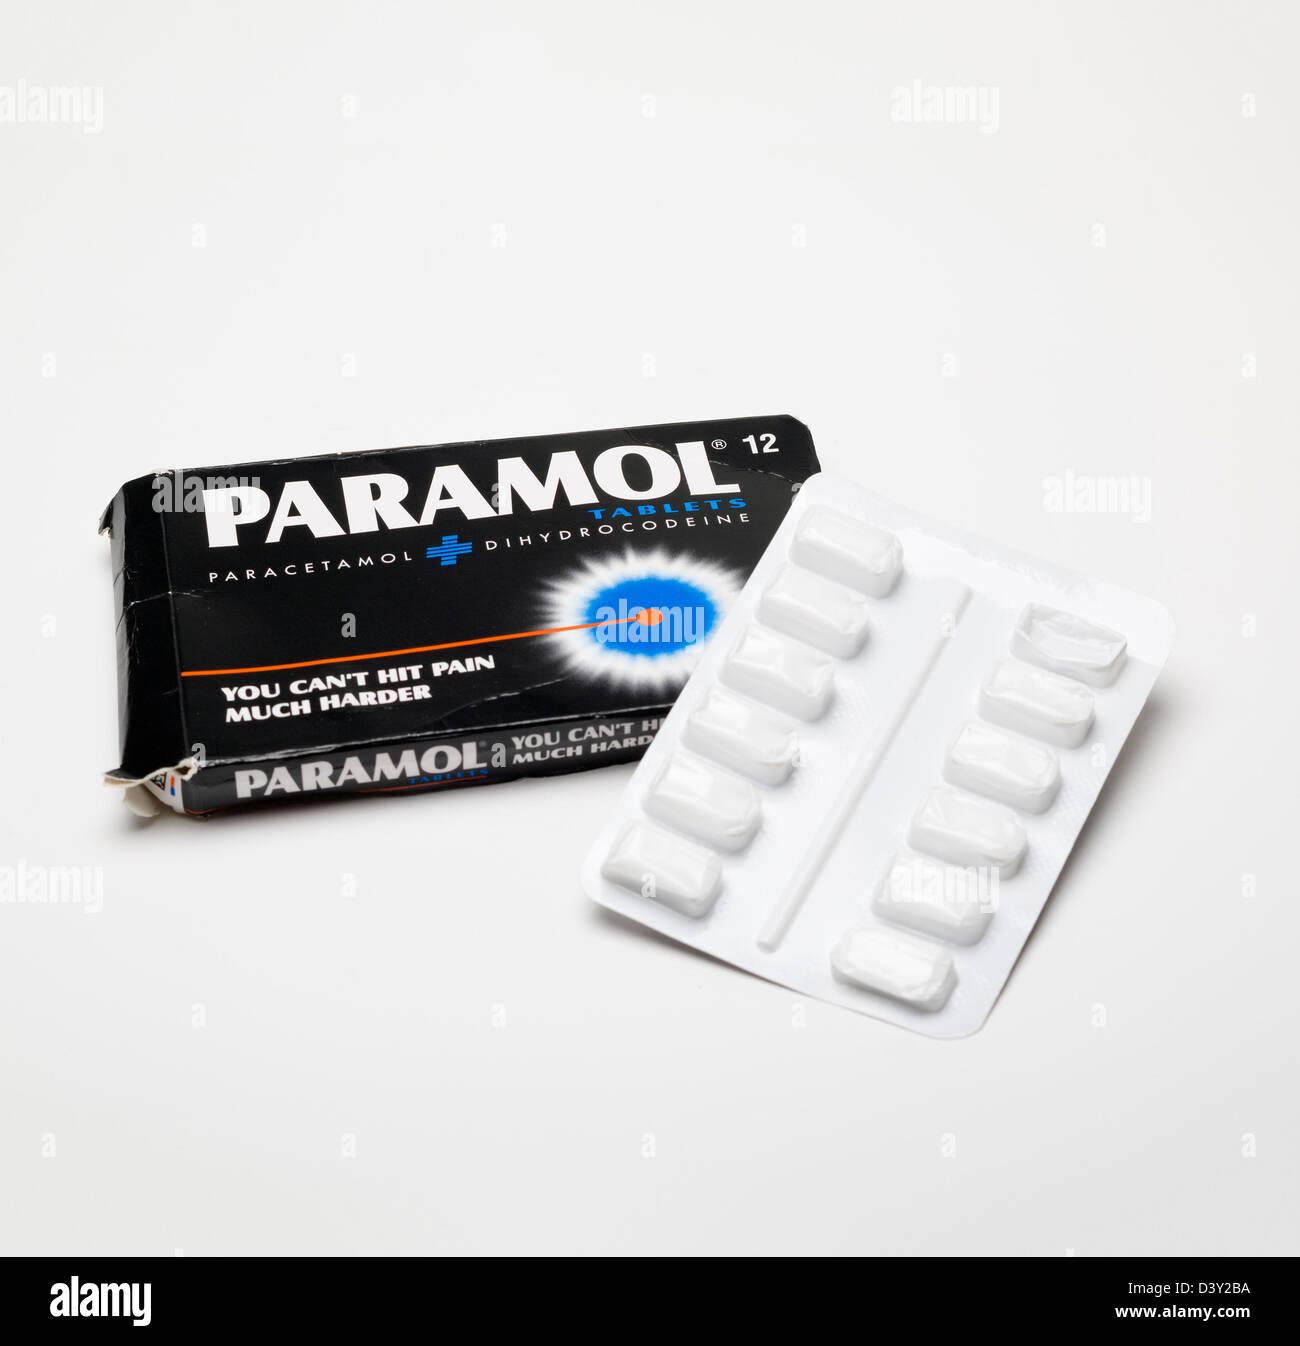 Paramol (paracetamol dihydrocodeine) tablets blister pack Stock Photo -  Alamy